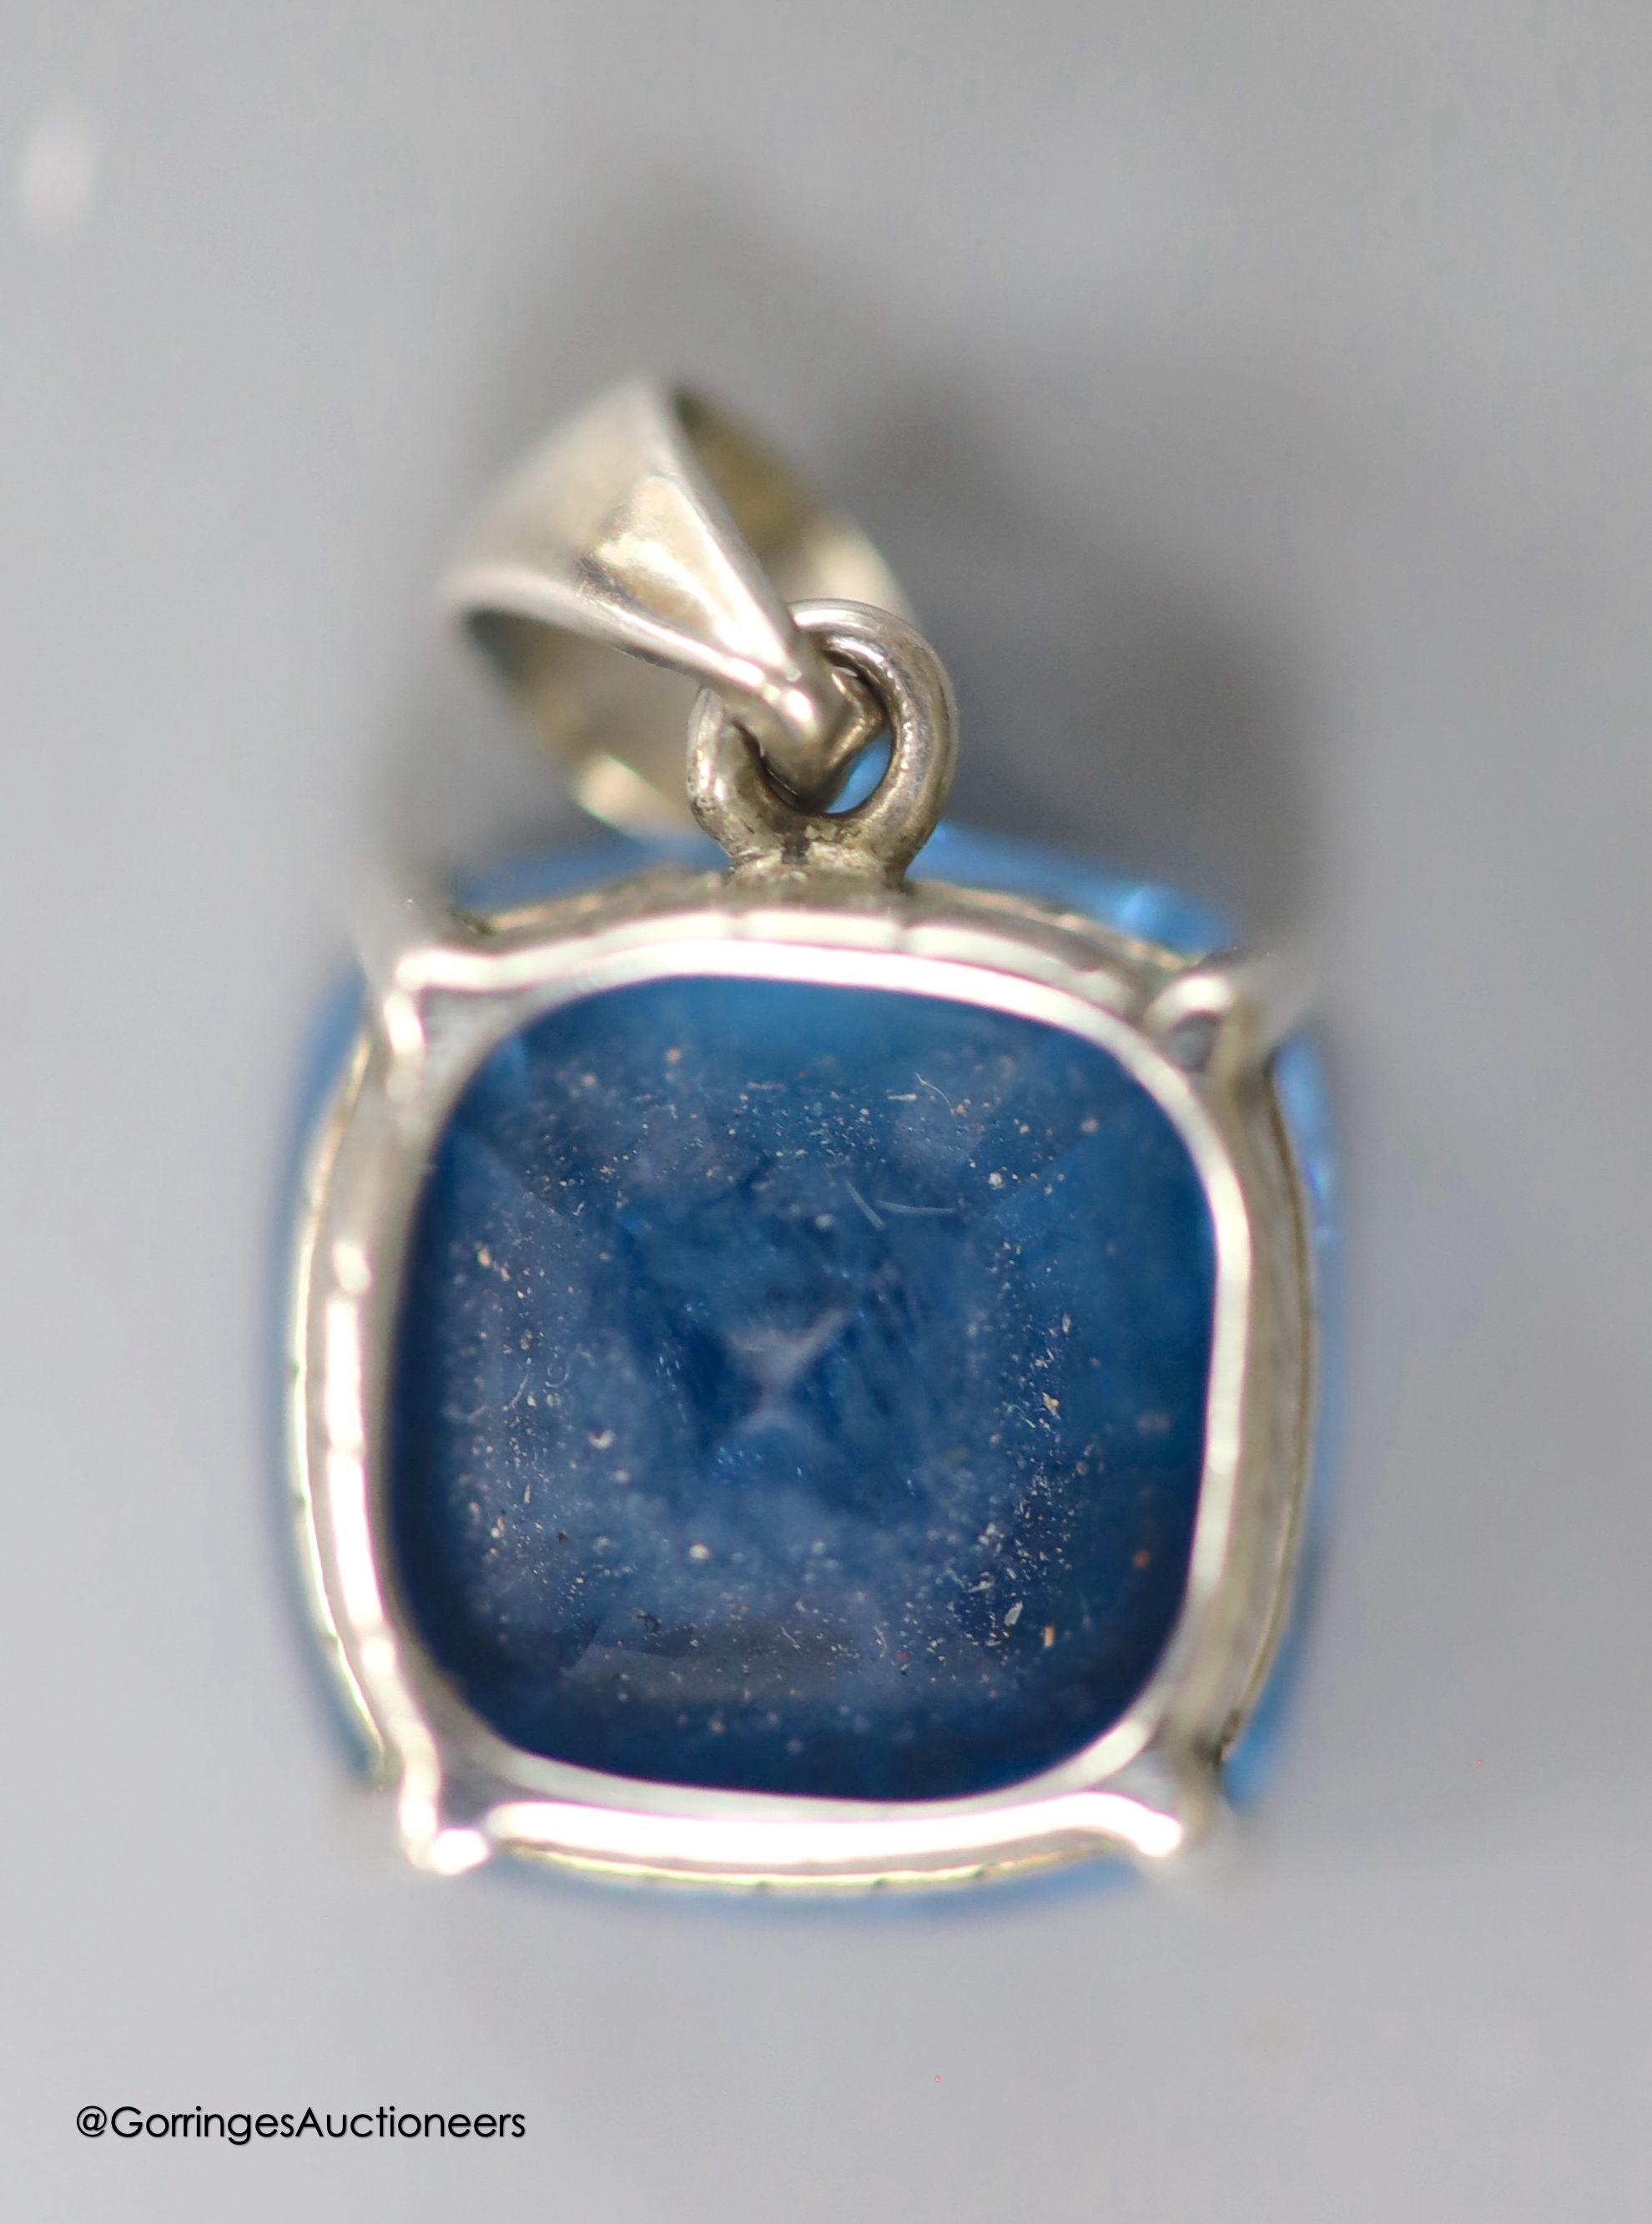 A white metal mounted square cushion cut blue topaz pendant